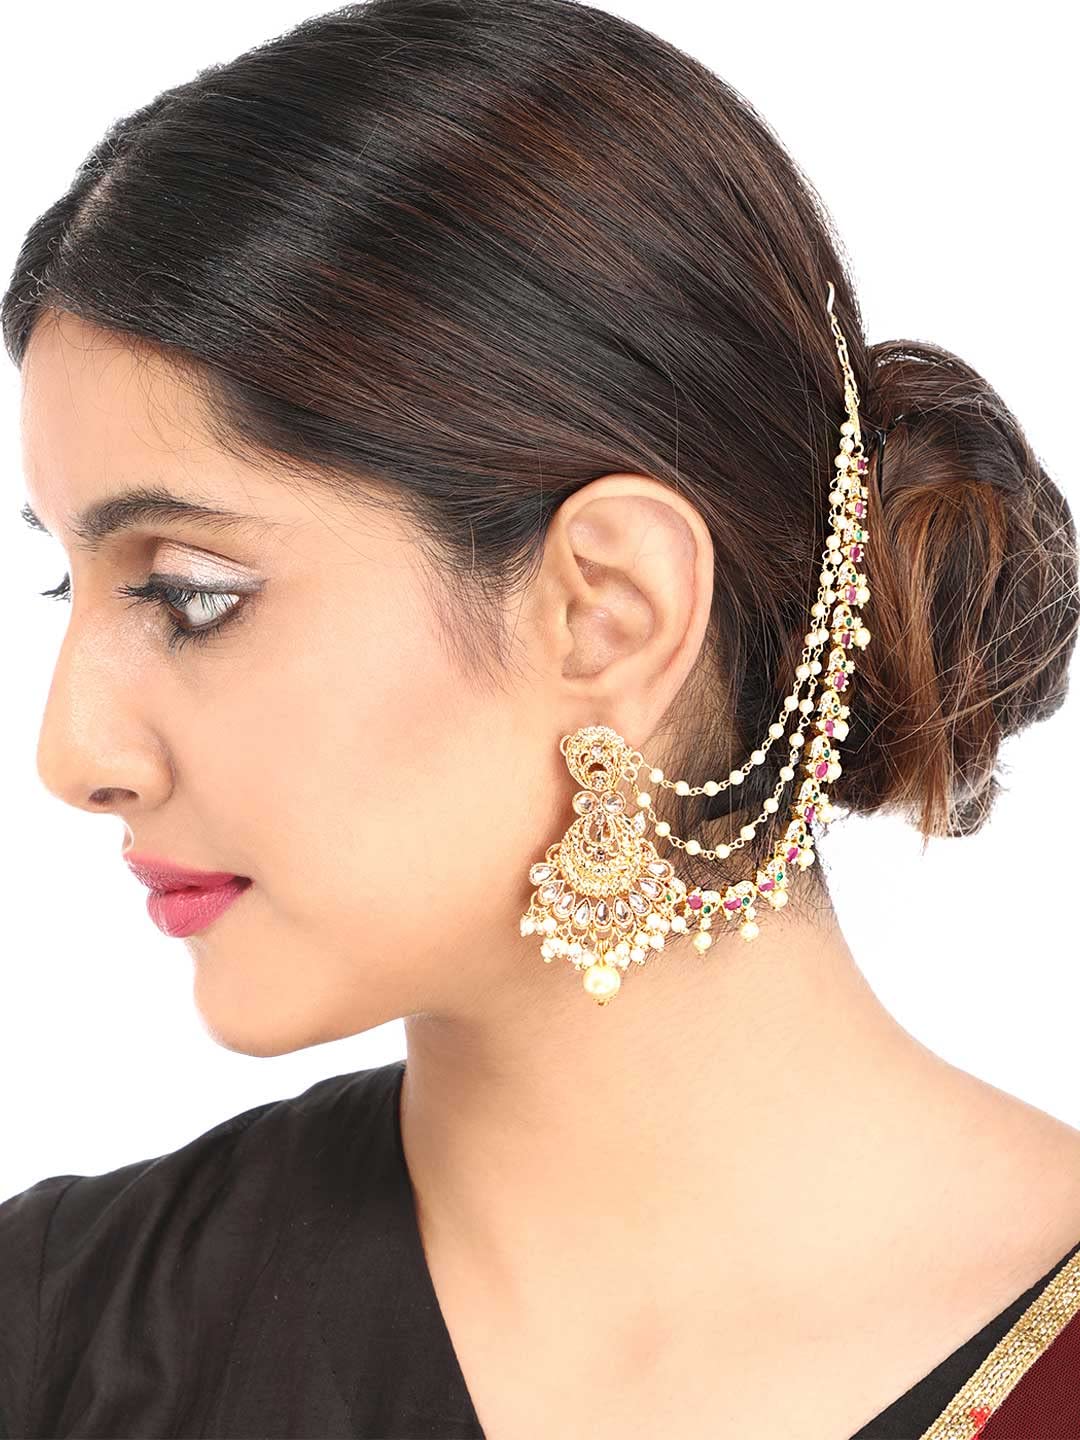 Indian Jewelry of Jumka for Girls, Wedding Ornament Stock Image - Image of  jewelry, thread: 196130891